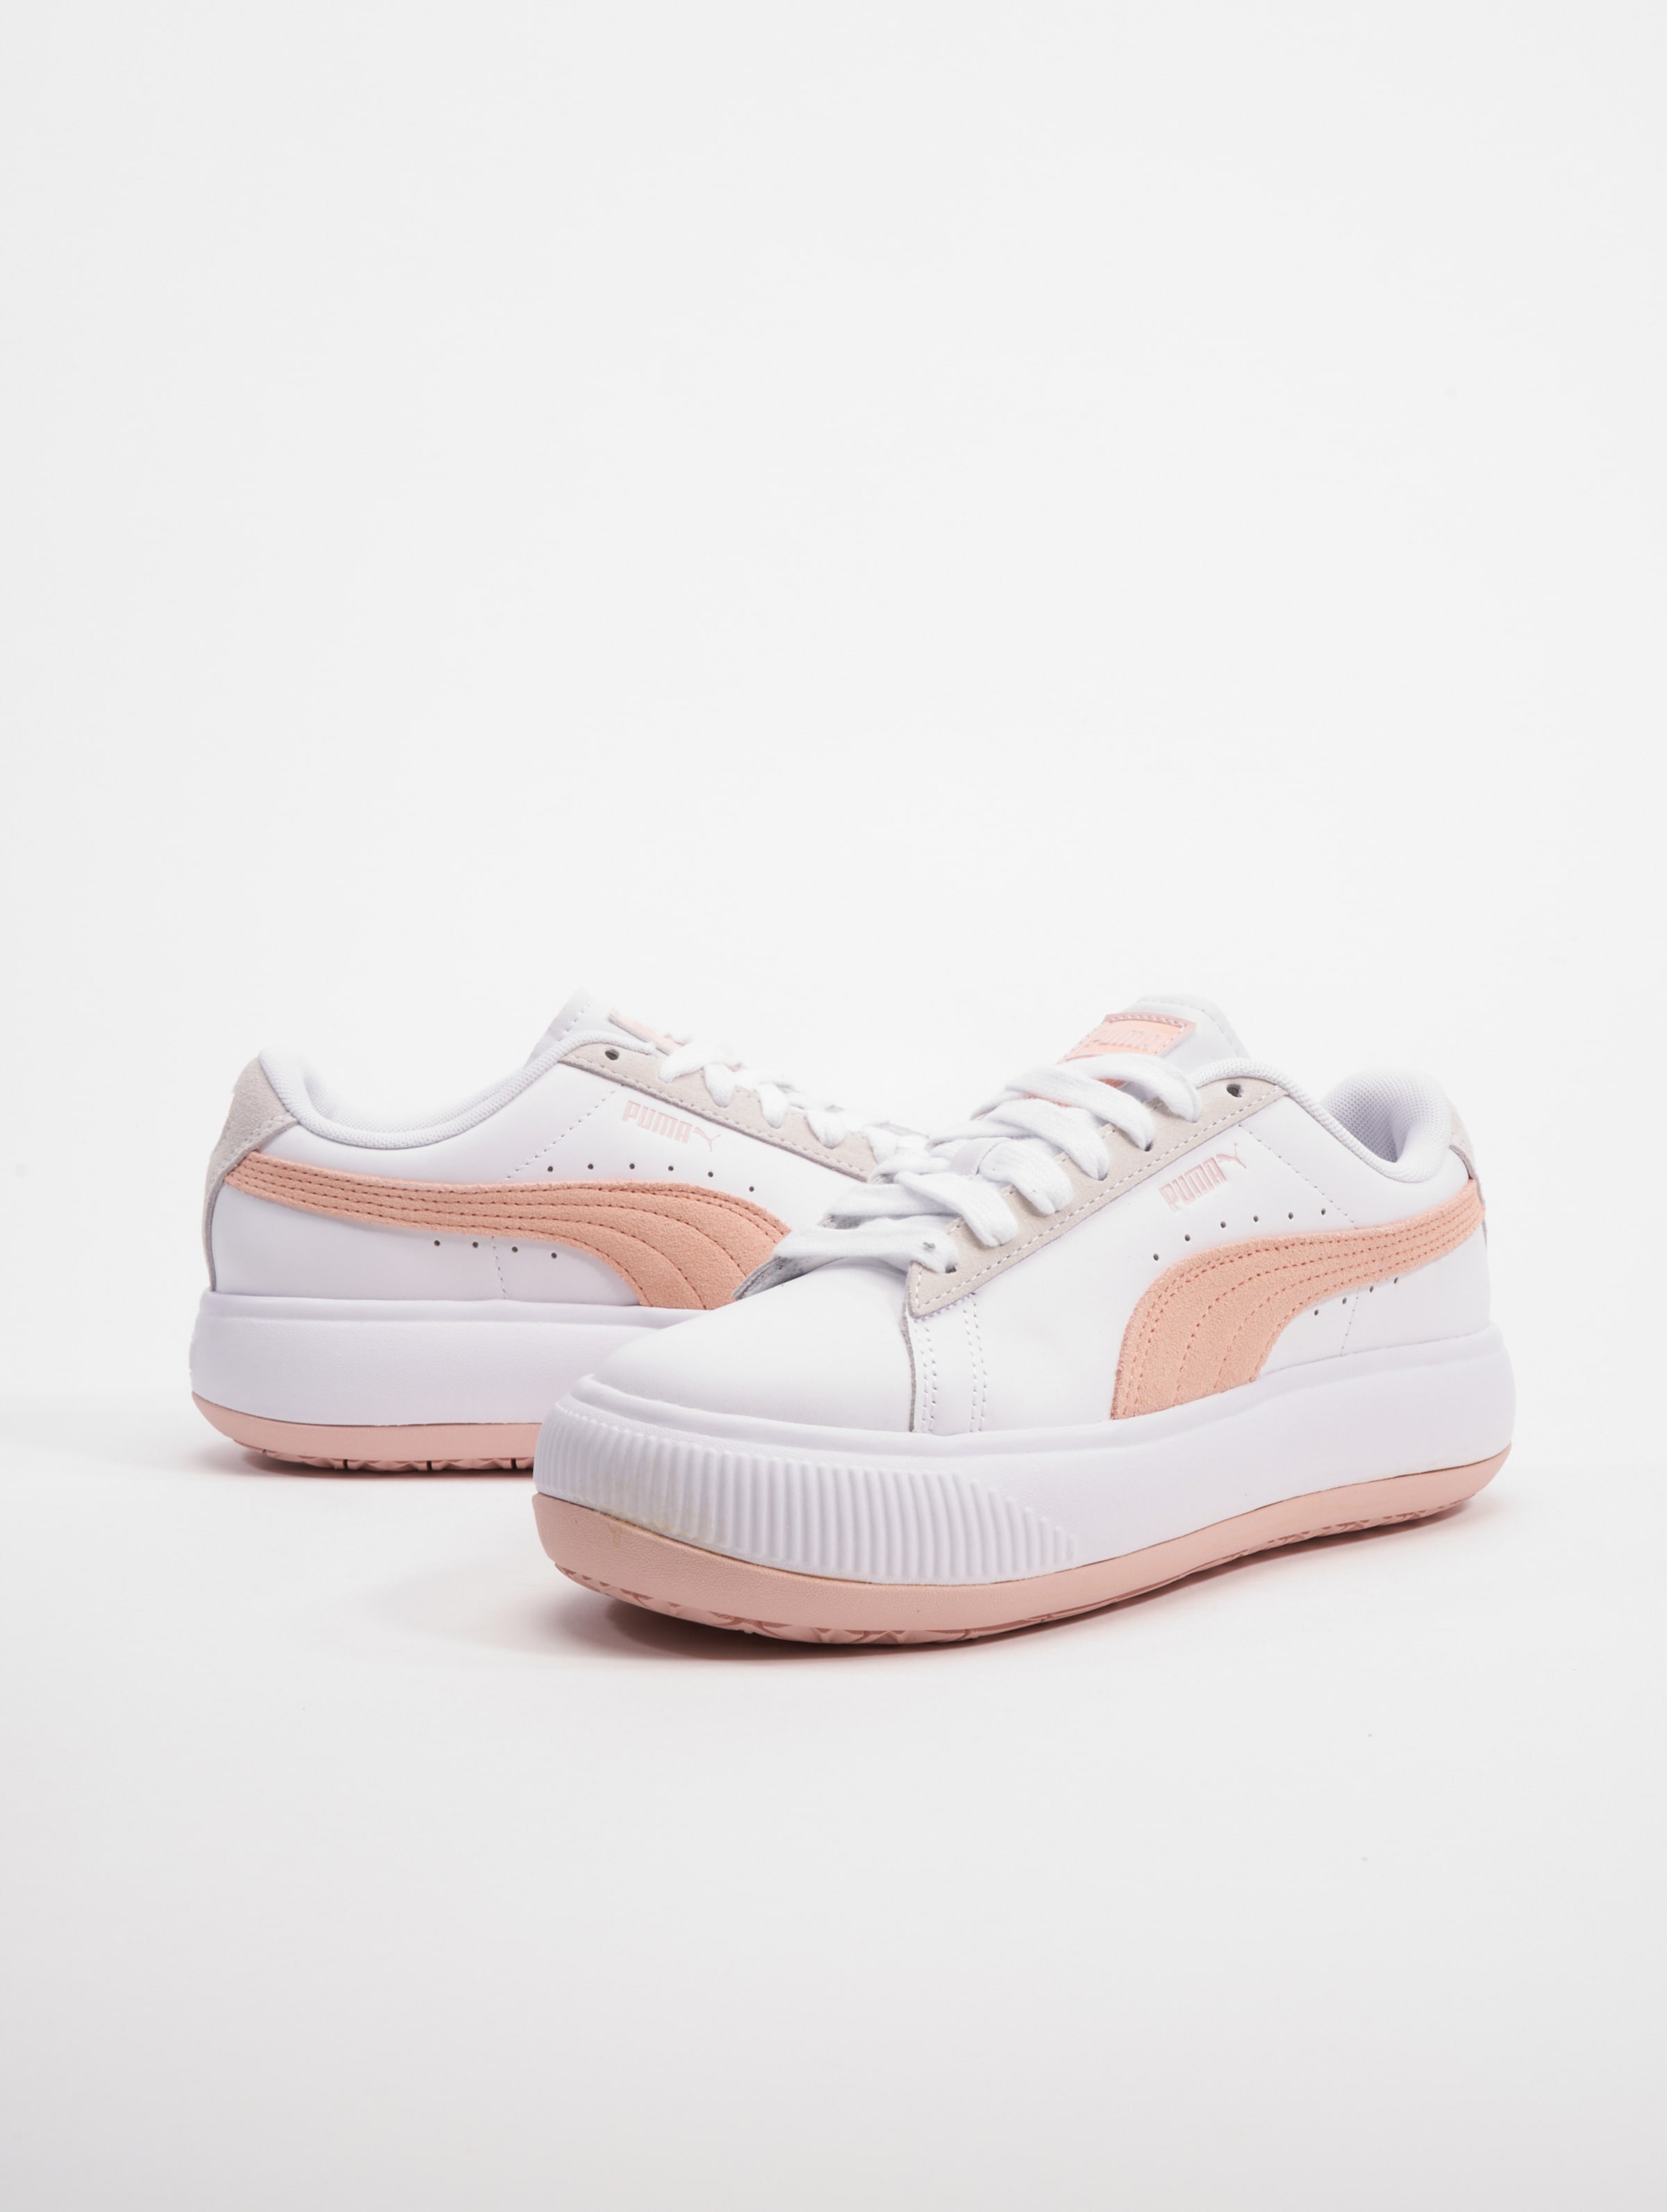 Puma Suede Mayu Mix Schuhe Frauen,Unisex op kleur wit, Maat 39